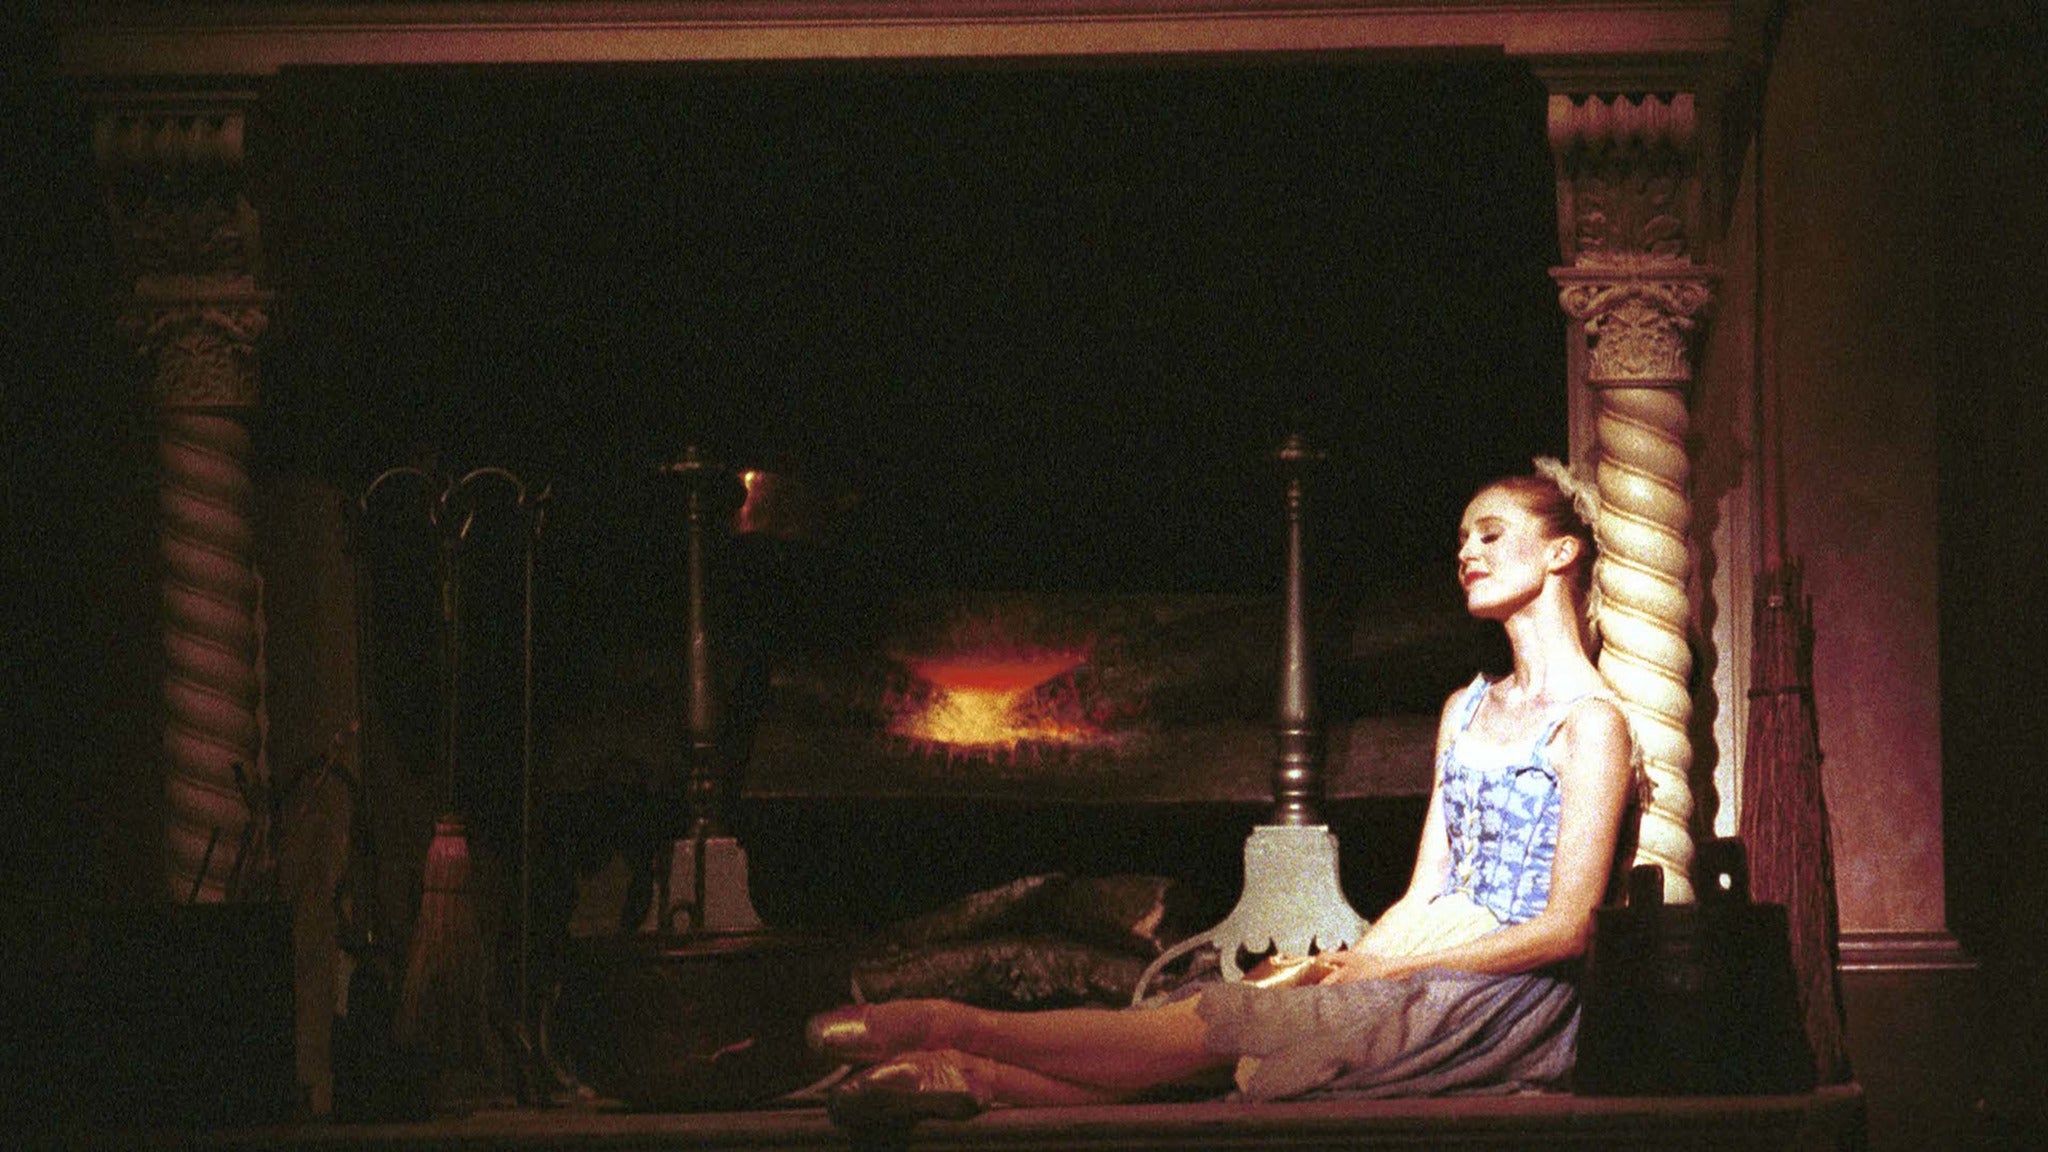 Lafayette Ballet Theatre Presents Cinderella in Lafayette promo photo for Exclusive presale offer code